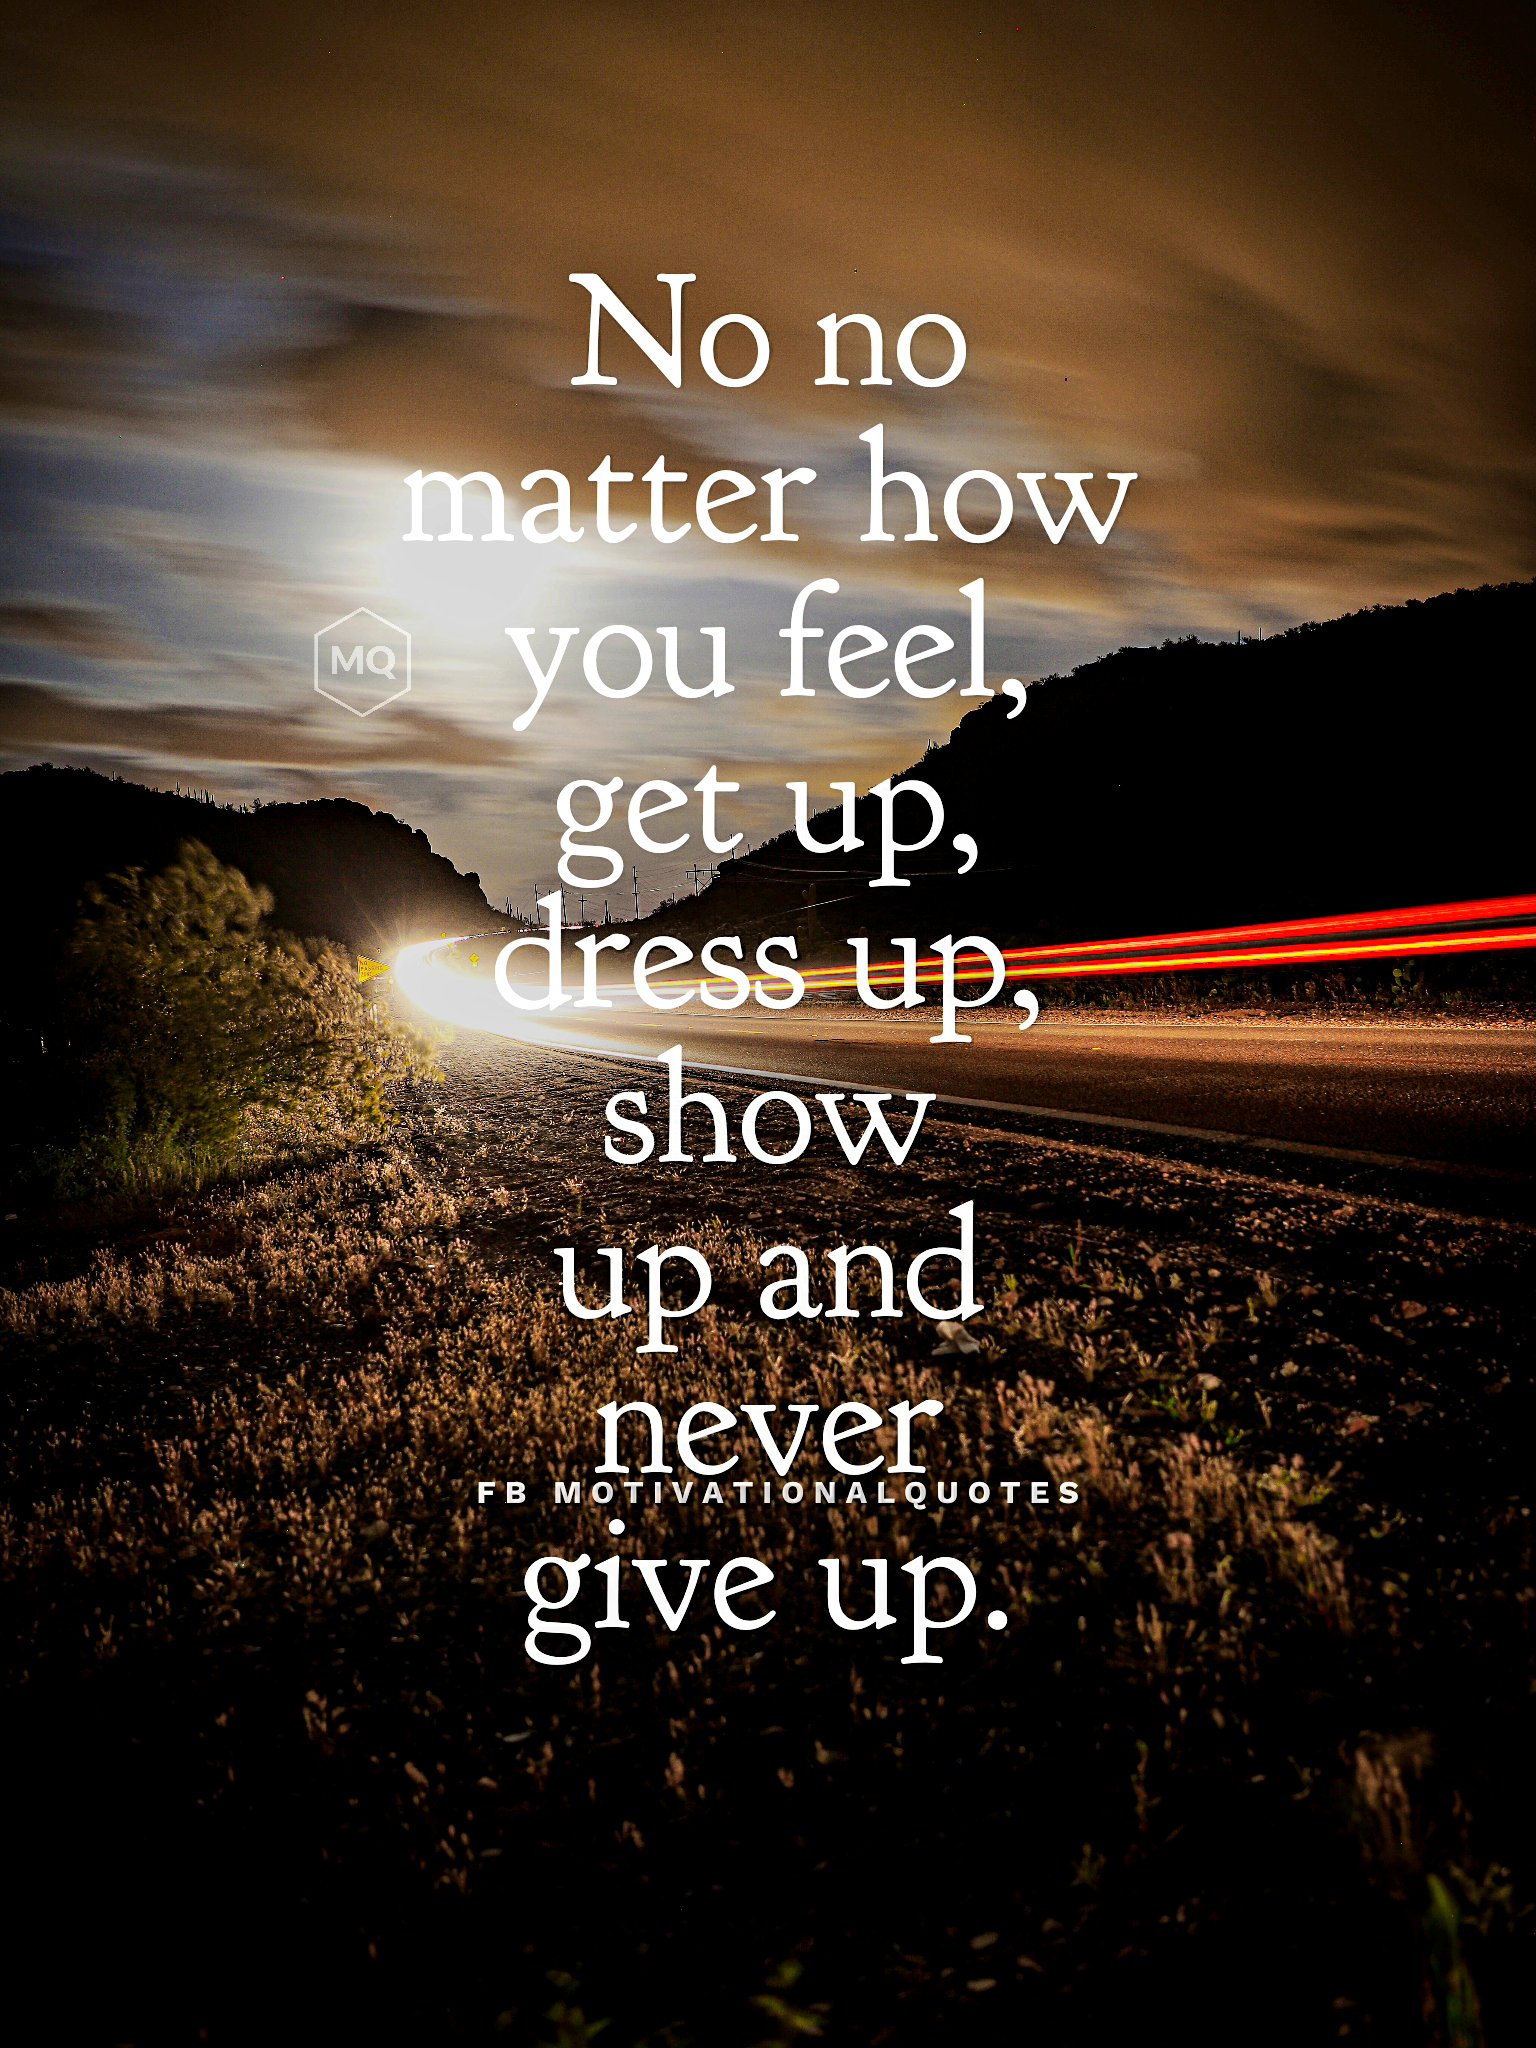 Motivational Quotes On Twitter: "Get Up, Dress Up, Show Up Https://T.co/Posullvppt" / Twitter